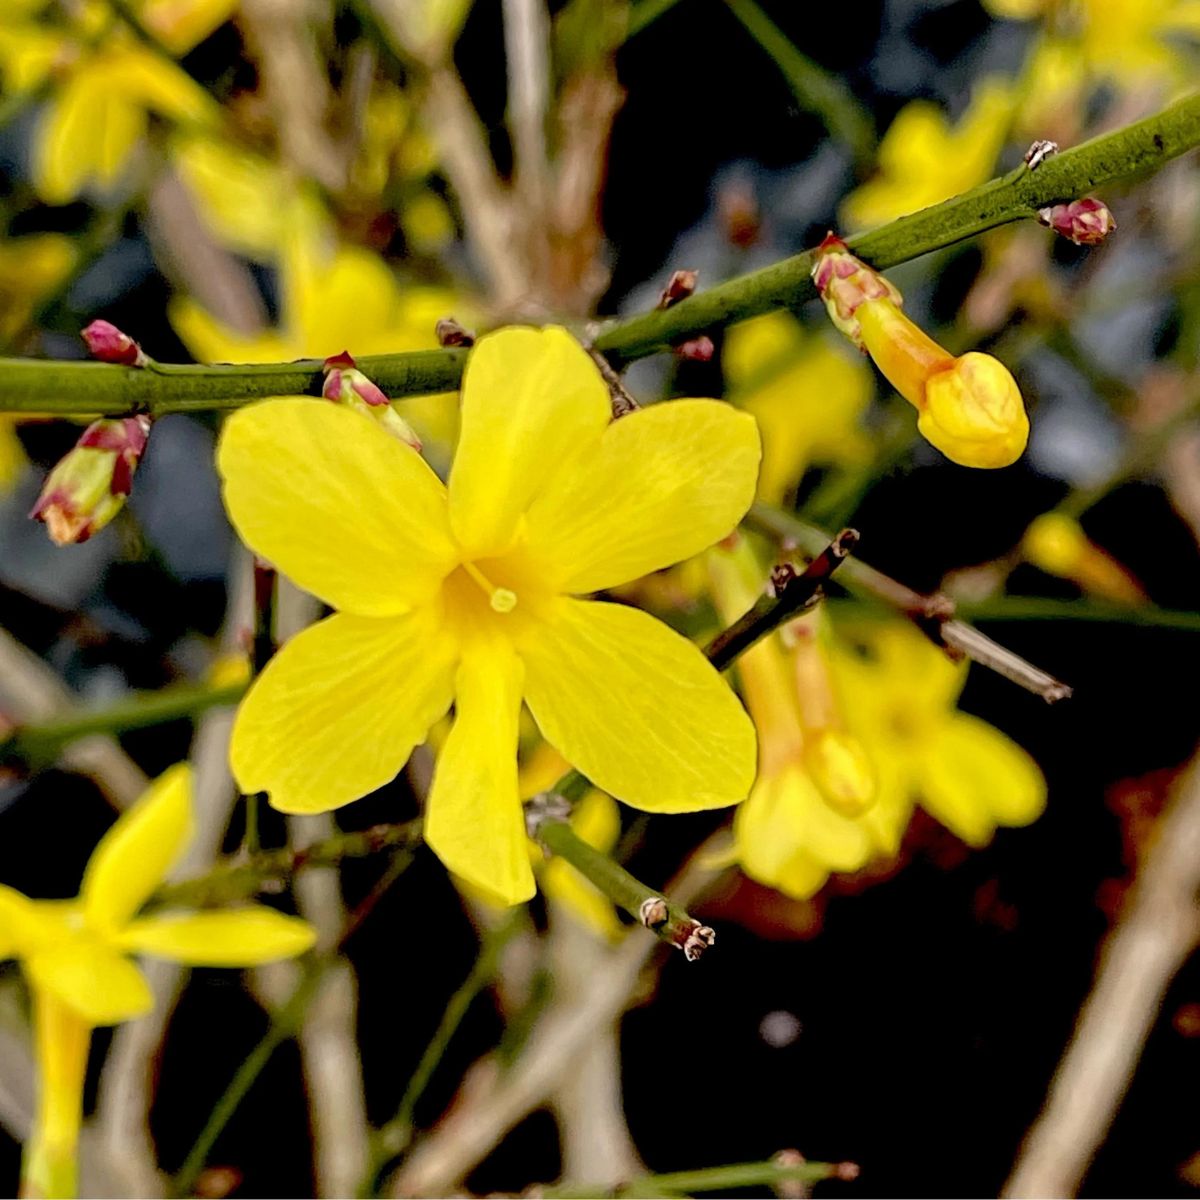 Meet the jasmine flower featured on Thursd